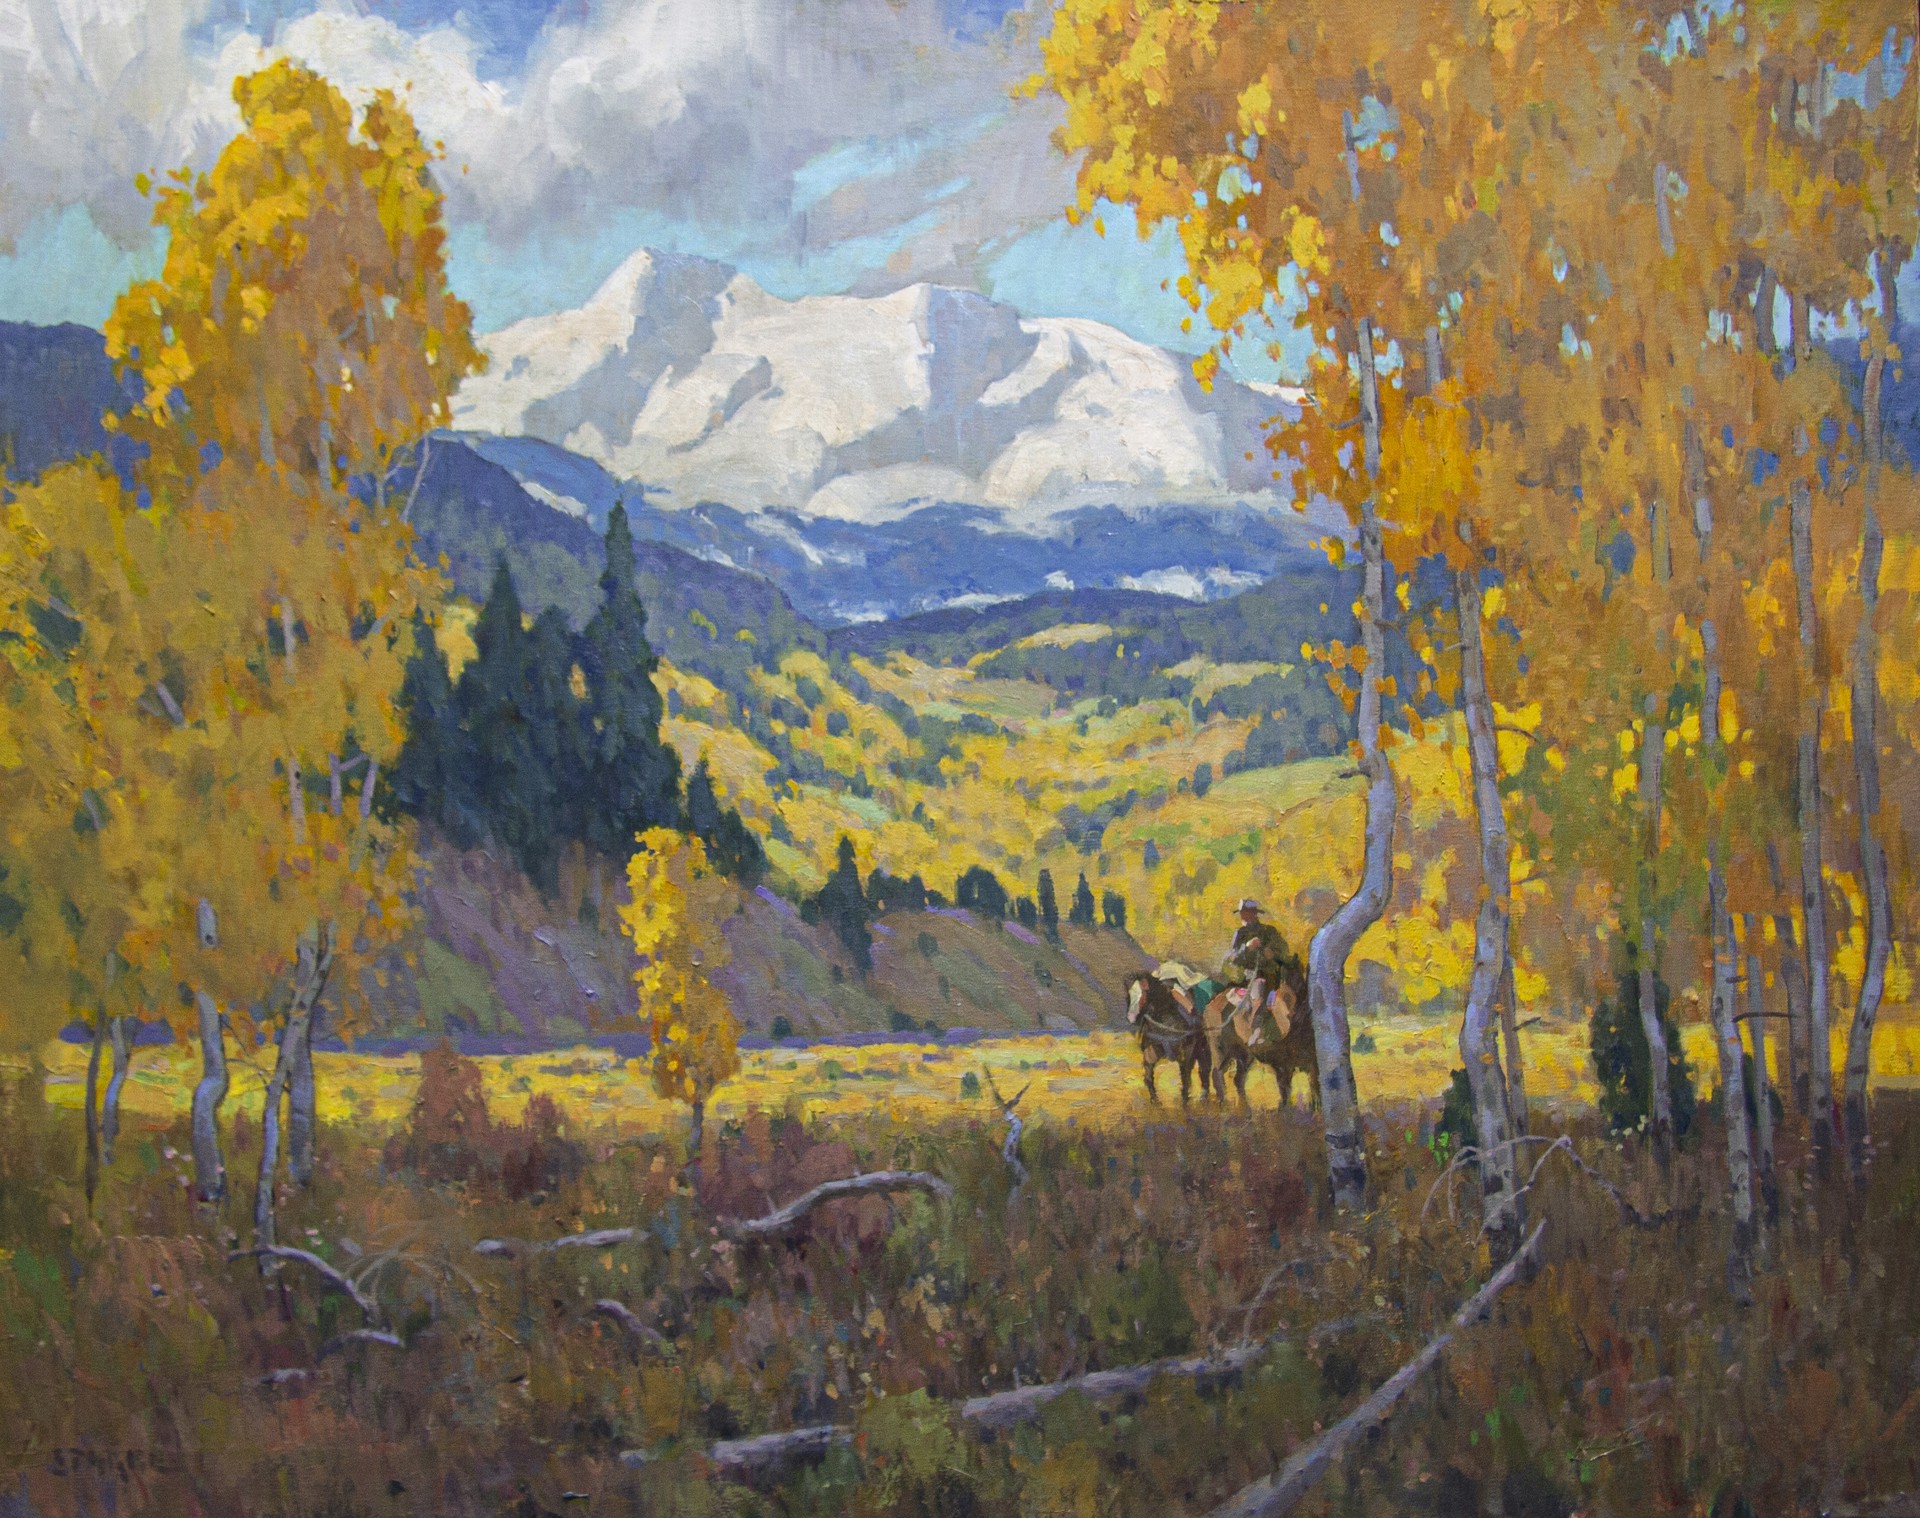 Abundance, Colorado Autumn by Phil Starke